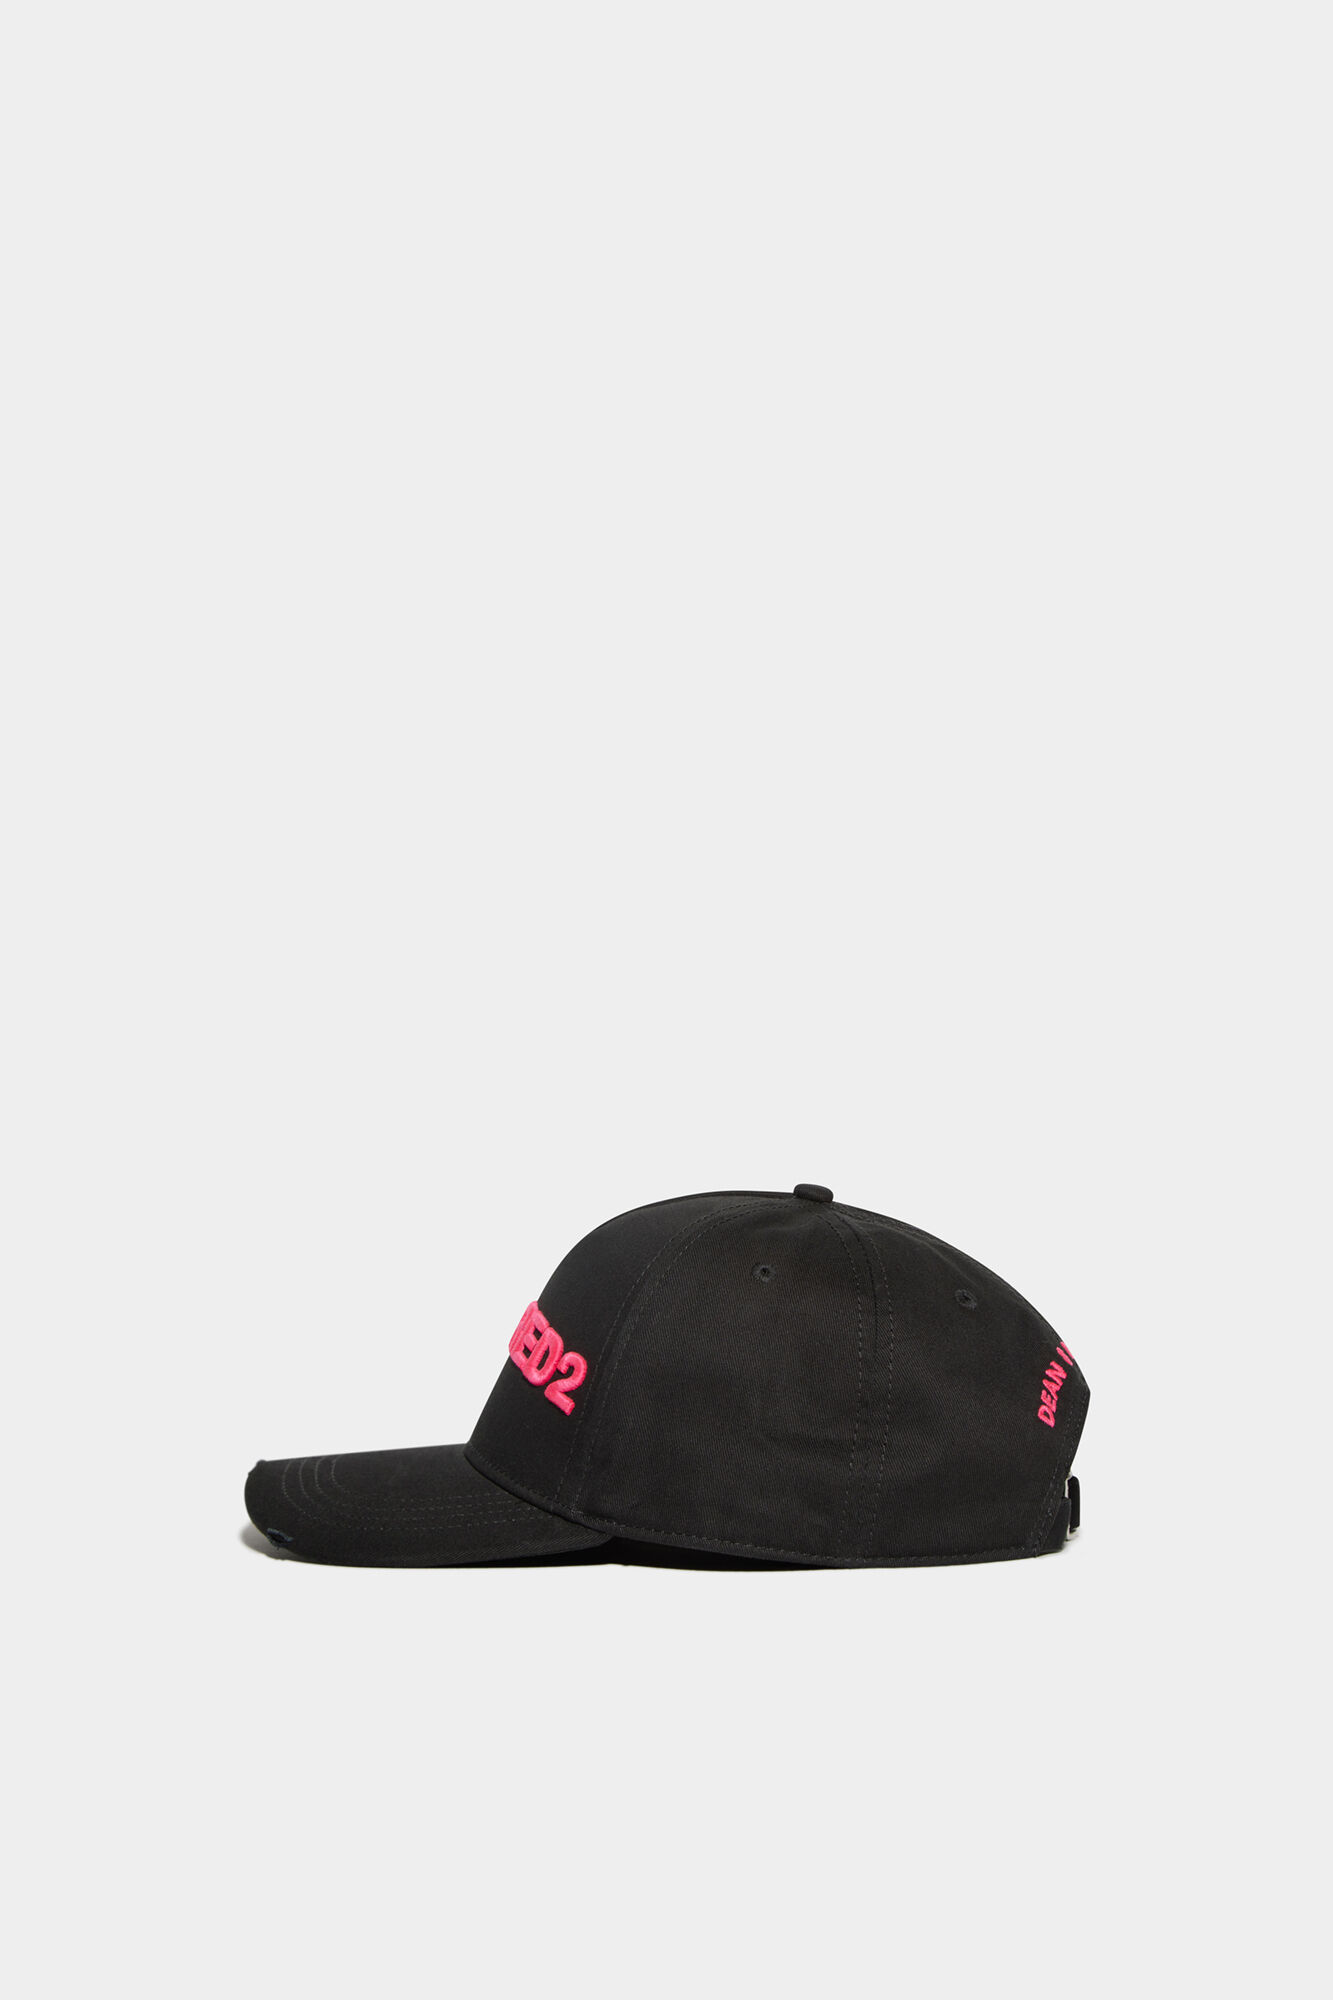 Dsquared2 Kids logo-print baseball cap - Black